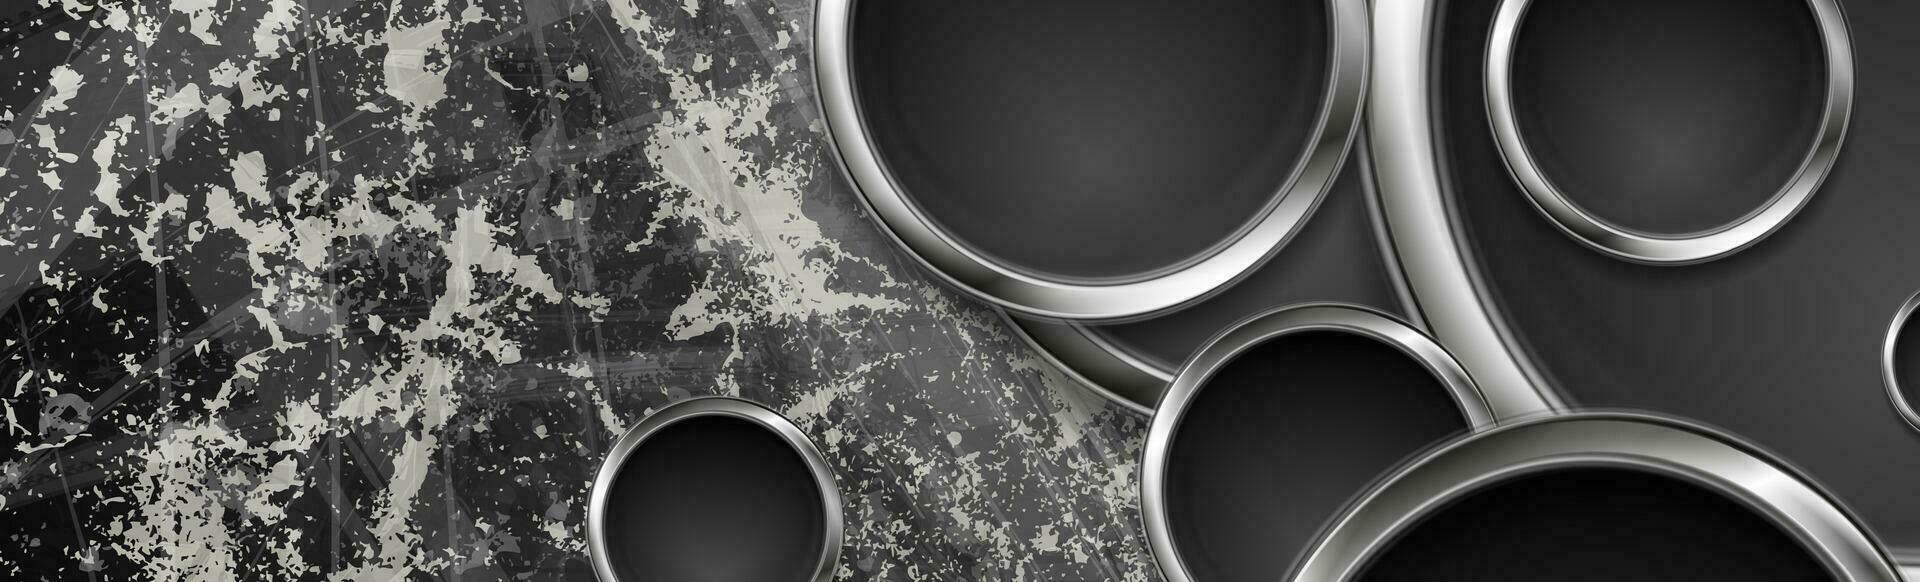 Hi-tech grunge background with silver metallic circles vector